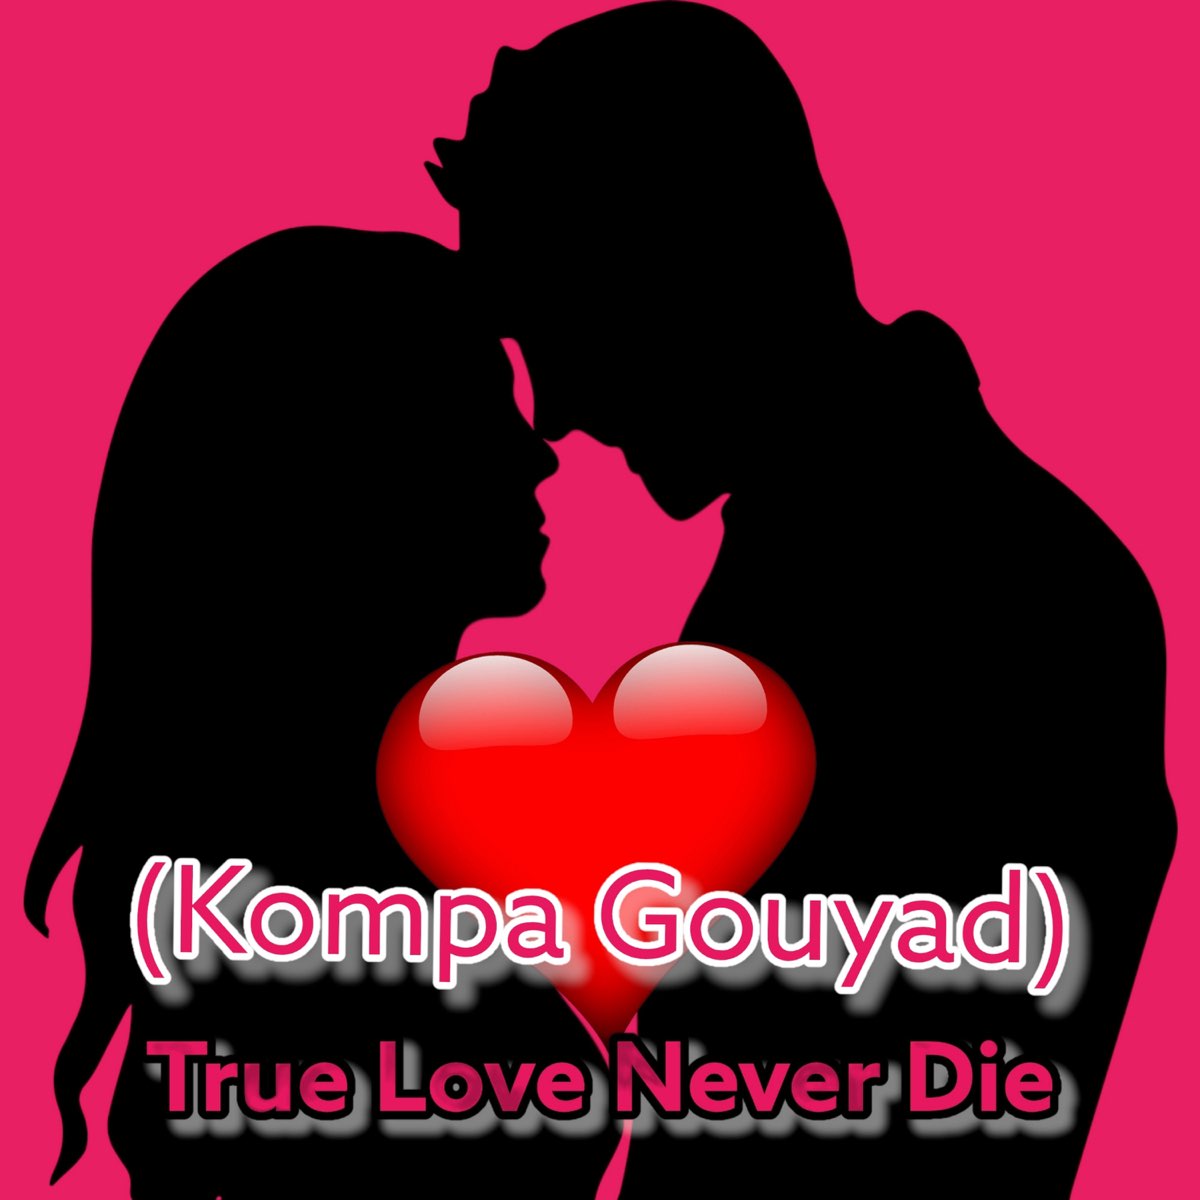 download true love mp3